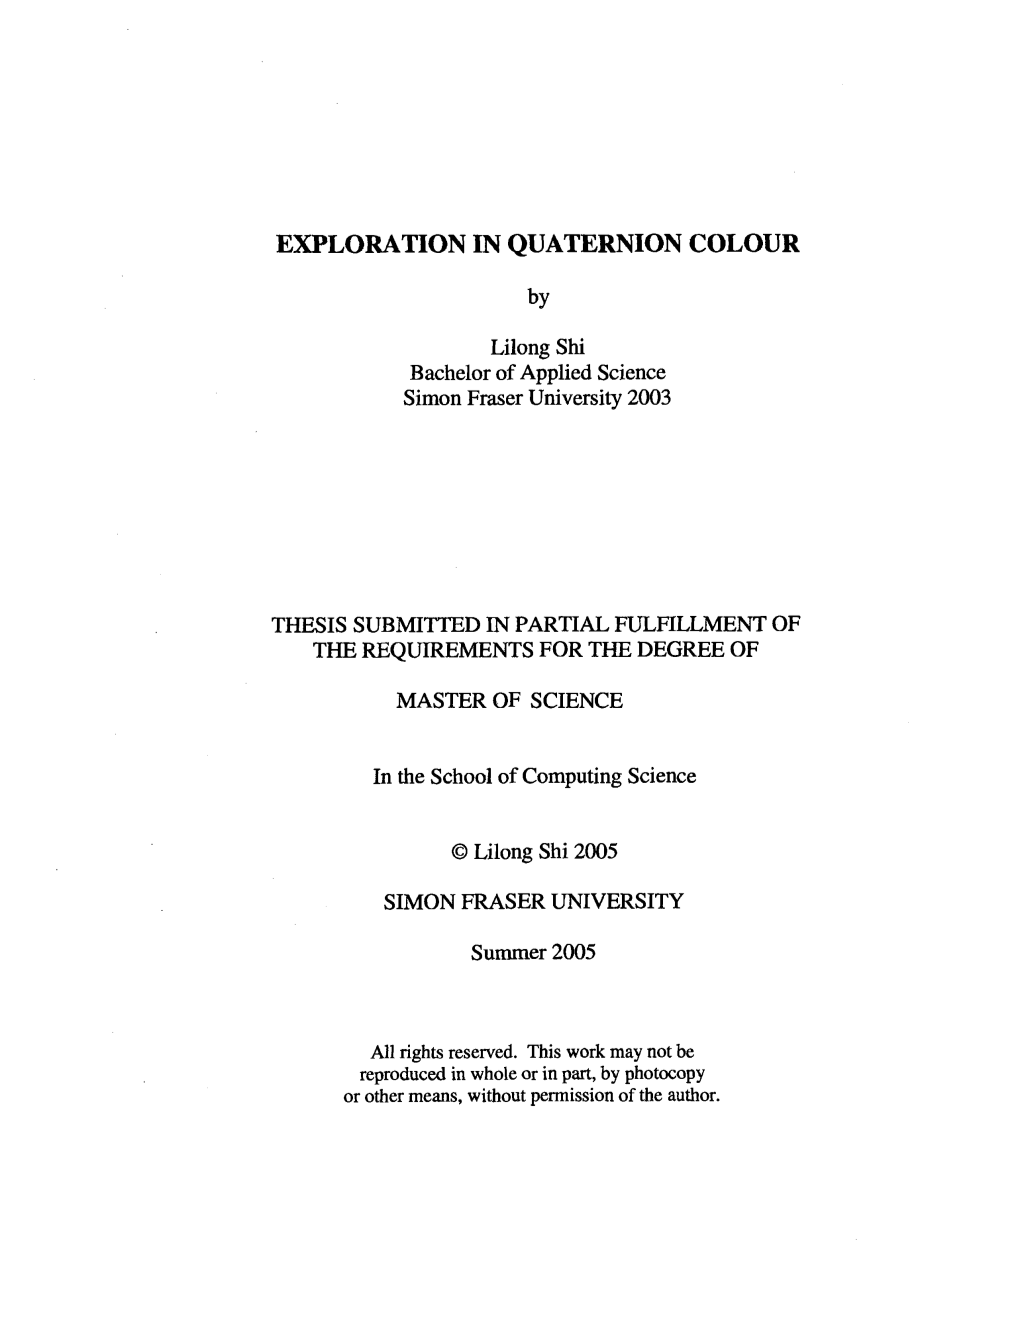 Exploration in Quaternion Colour